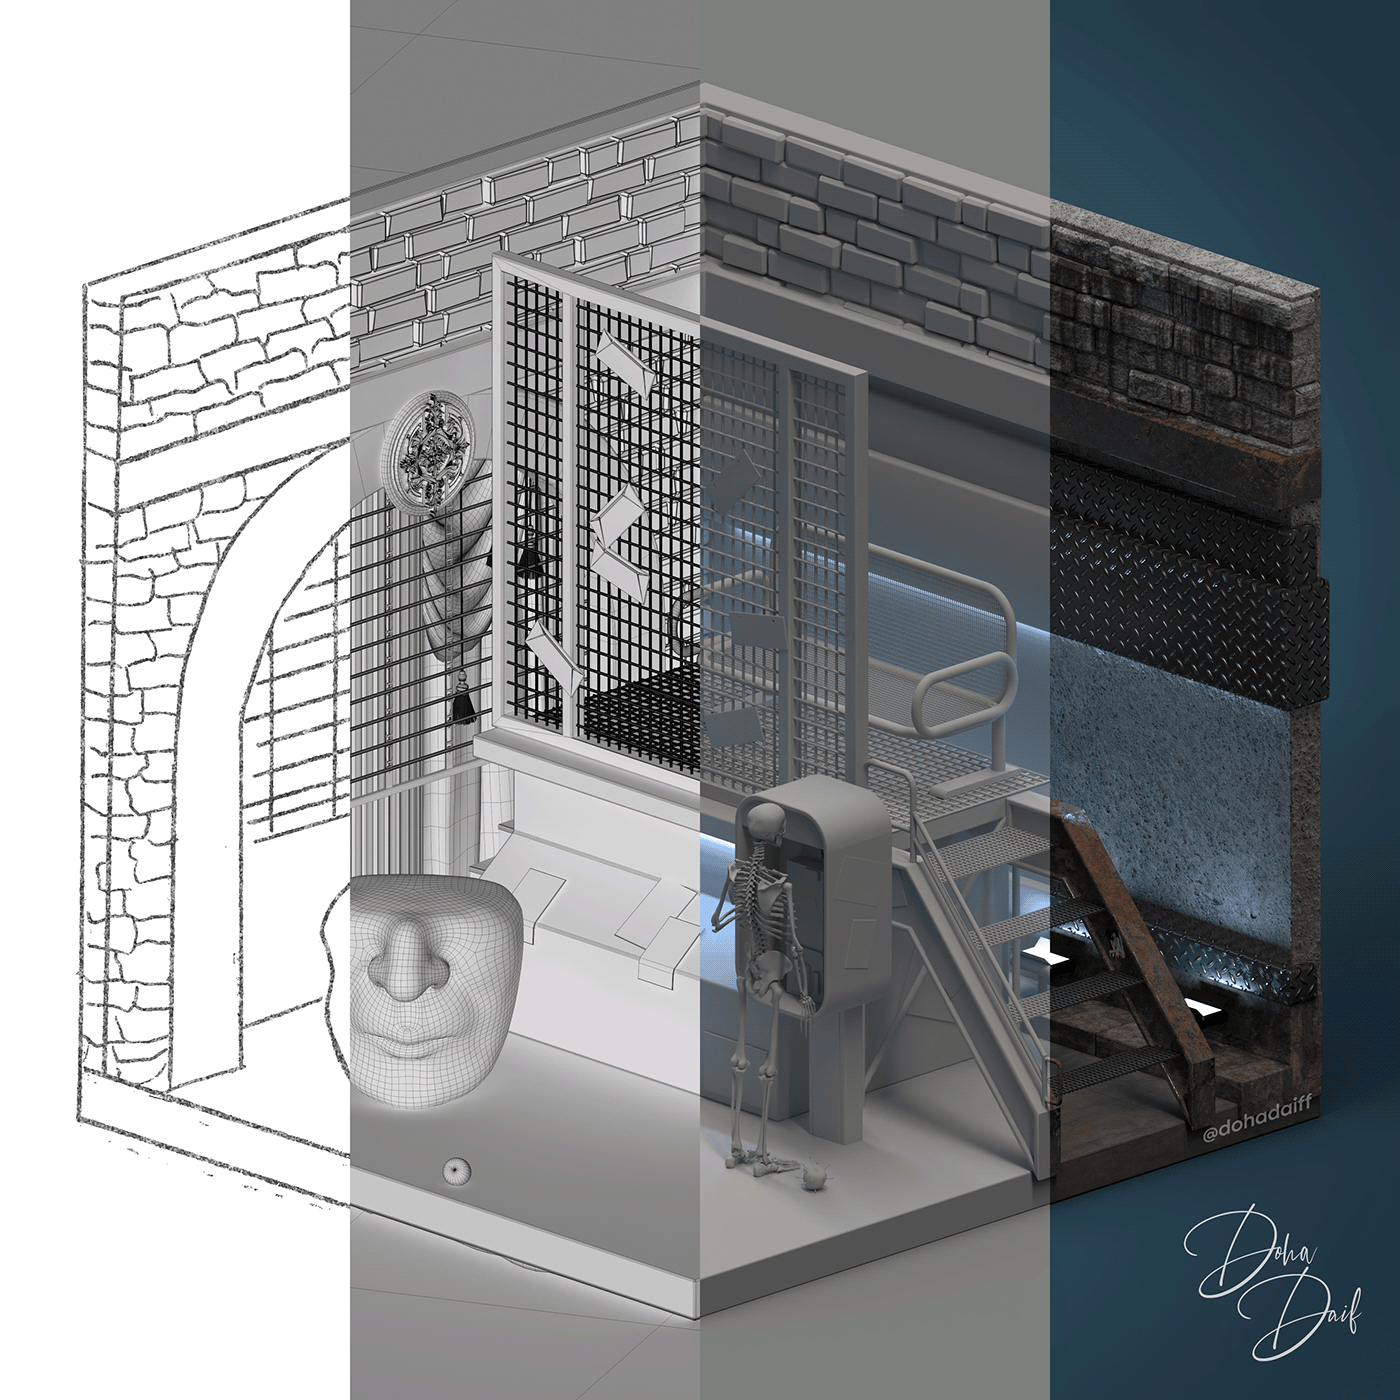 Isometric Isometric Art Diorama diorama 3D snsd 3dart Digital Art  musicvideo artistic gritty